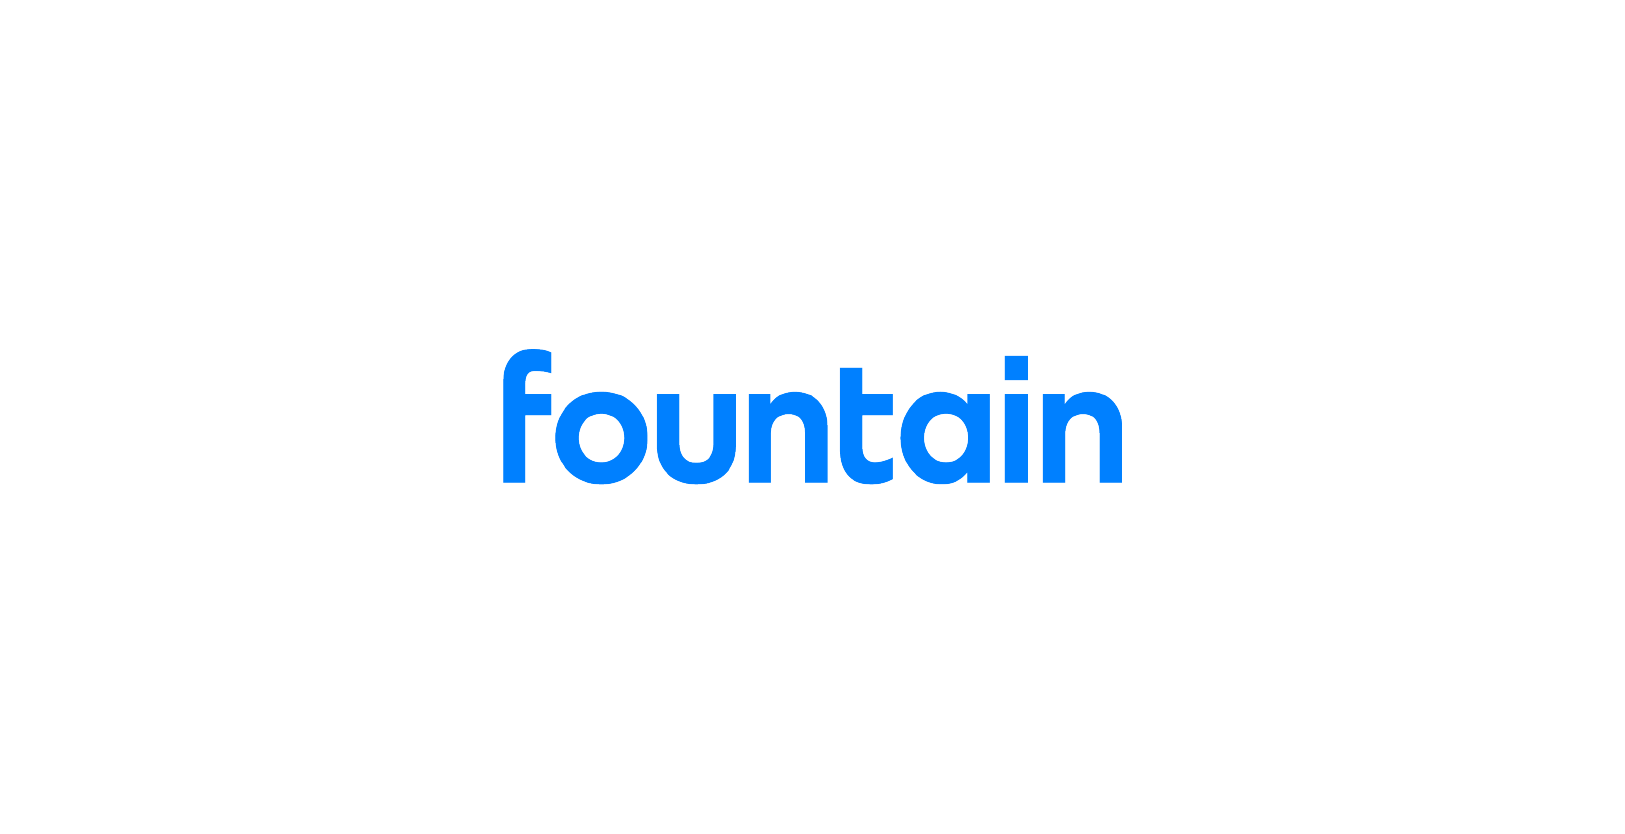 Vision Fund investment portfolio company Fountain's logo